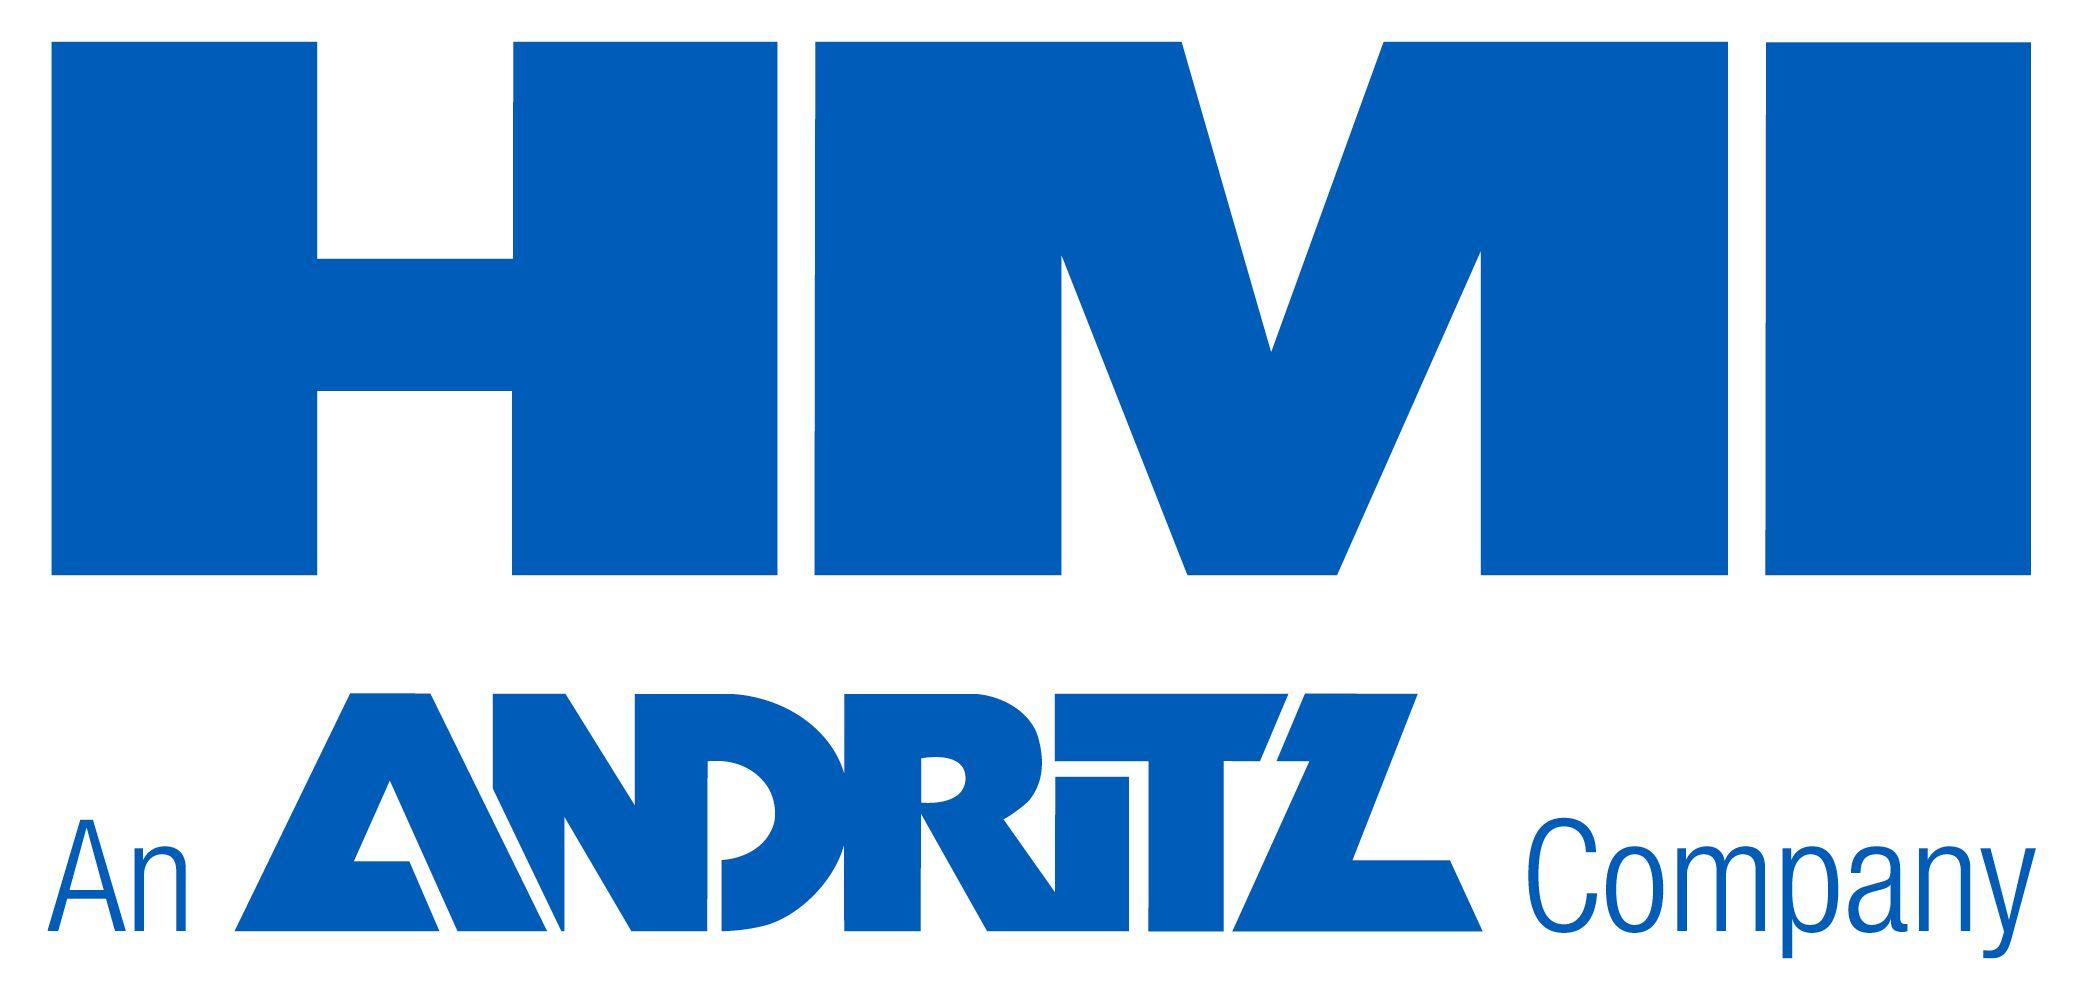 Andritz Logo - HMI NOW PART OF THE ANDRITZ GROUP OF COMPANIES | HMI